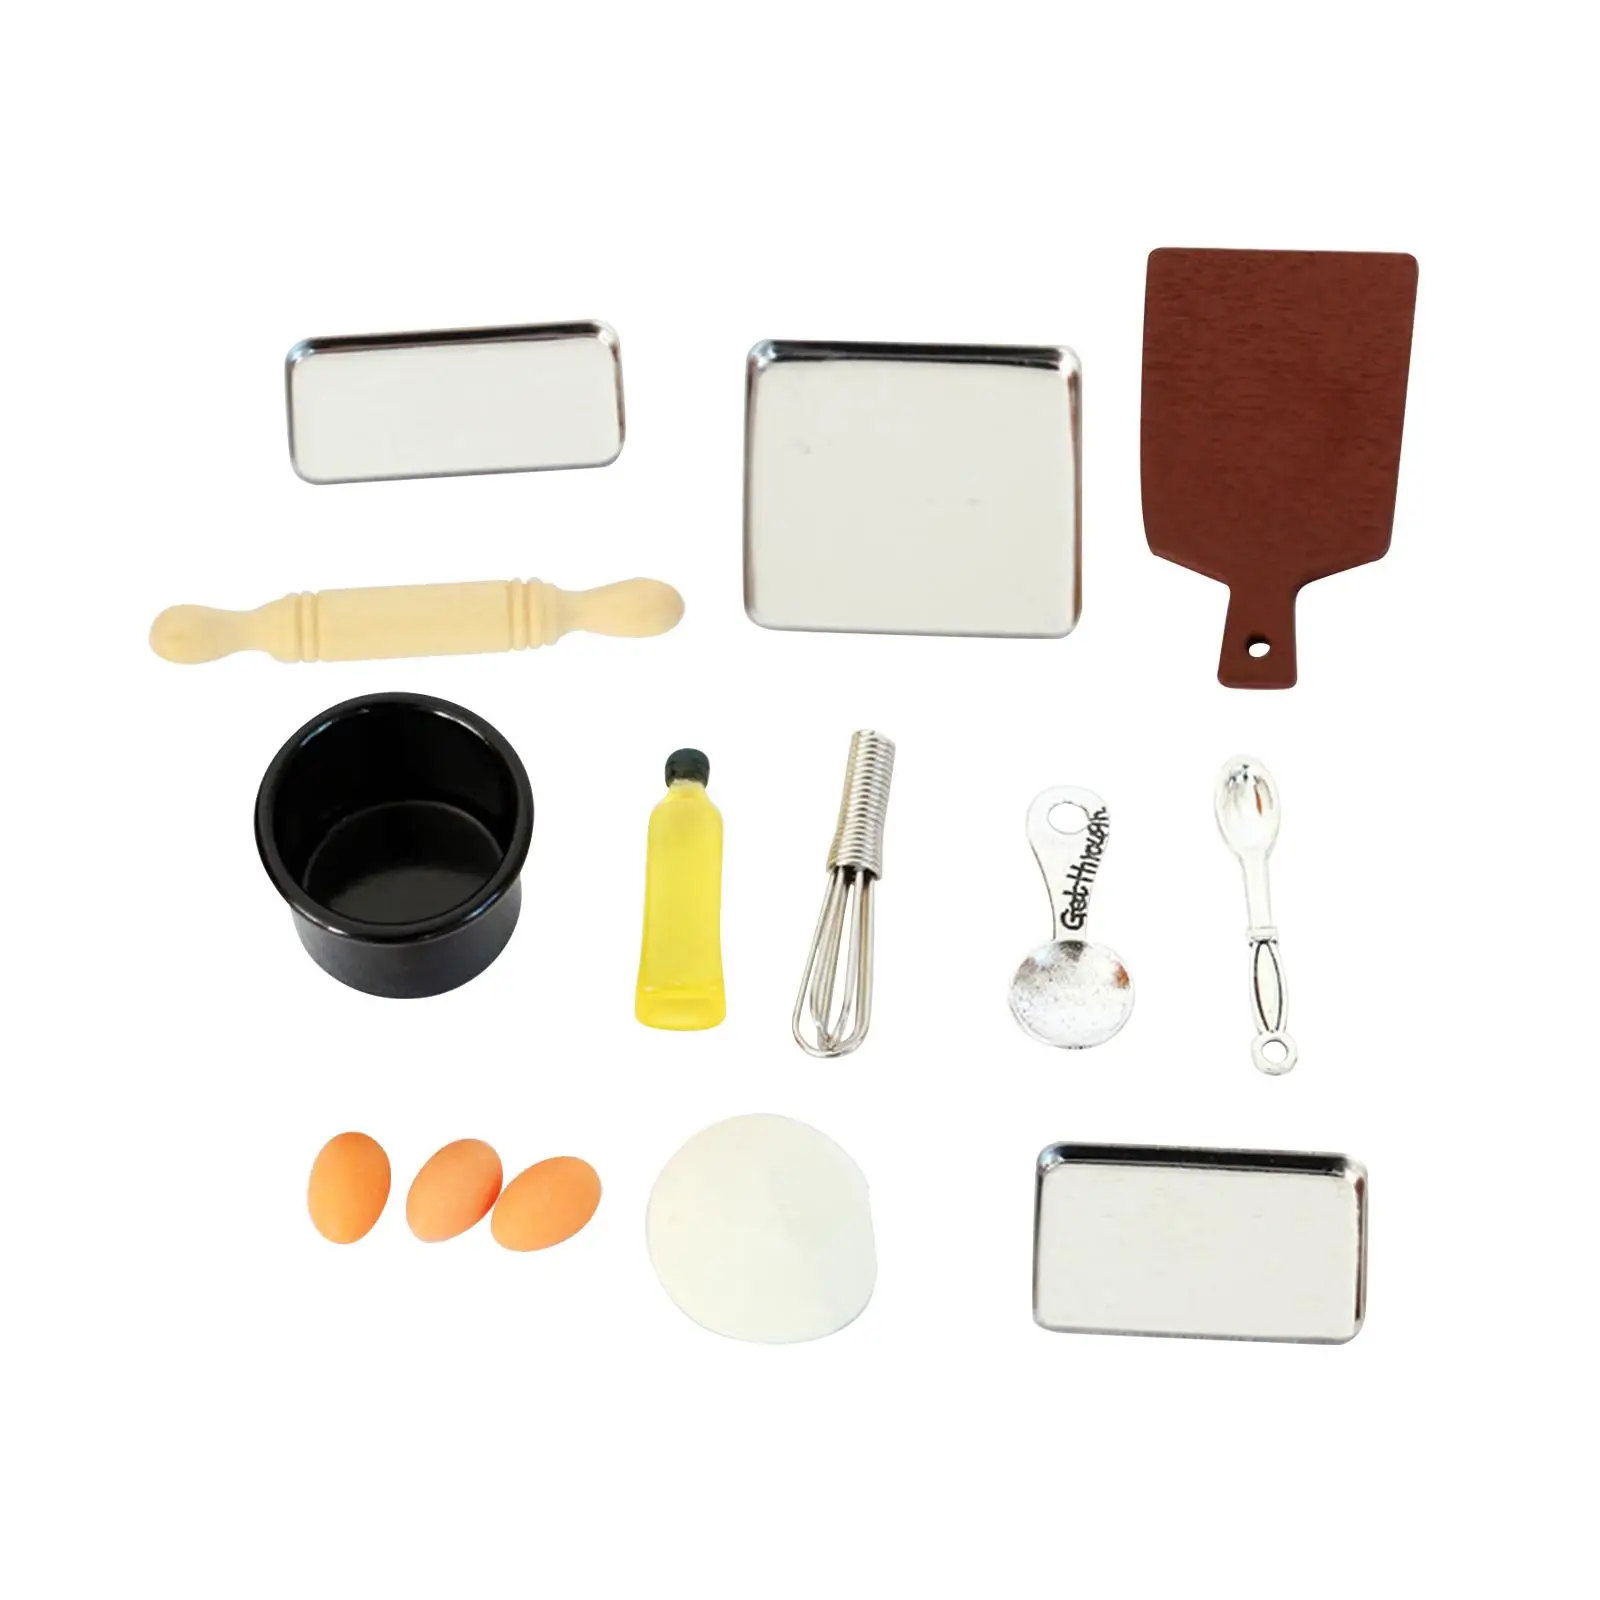 Food Baking Scene Dollhouse Kitchen Accessories for Crafts Window Display